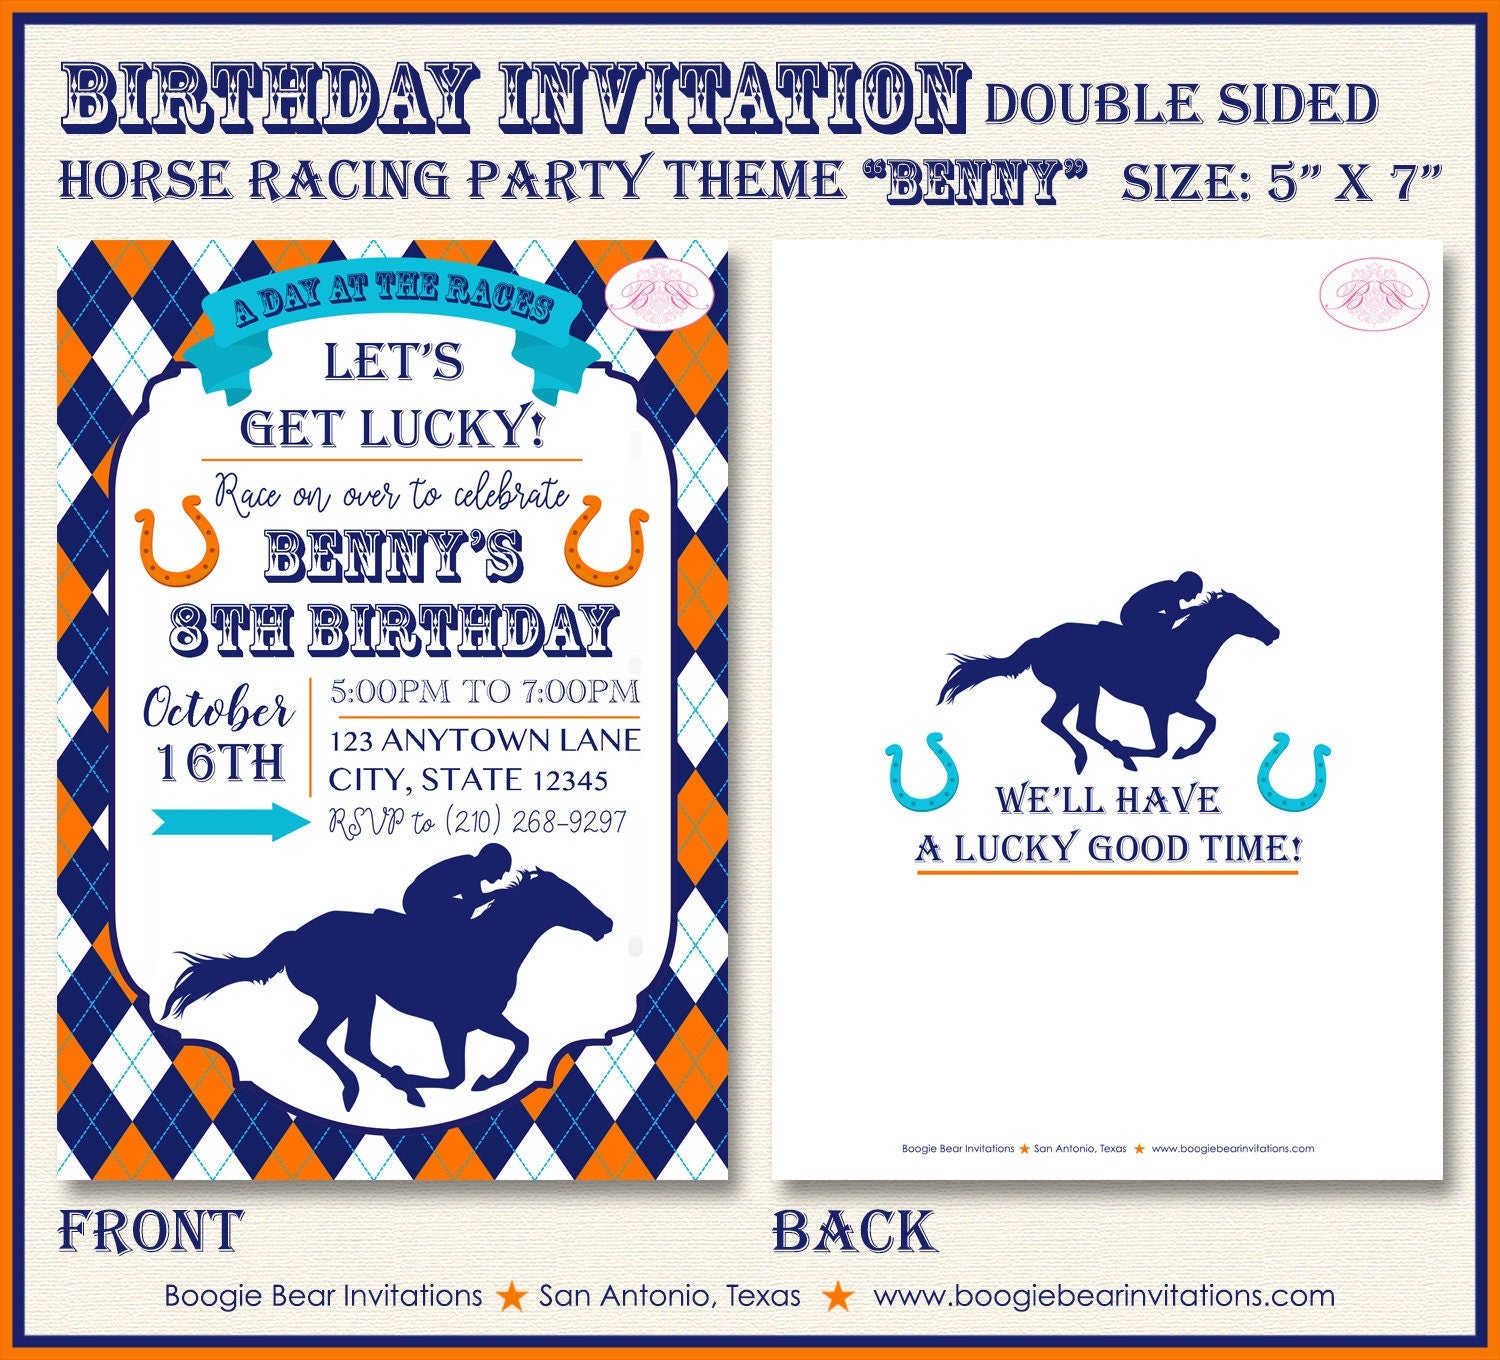 Horse racing birthday party invitation orange blue kentucky derby race â boogie bear invitations